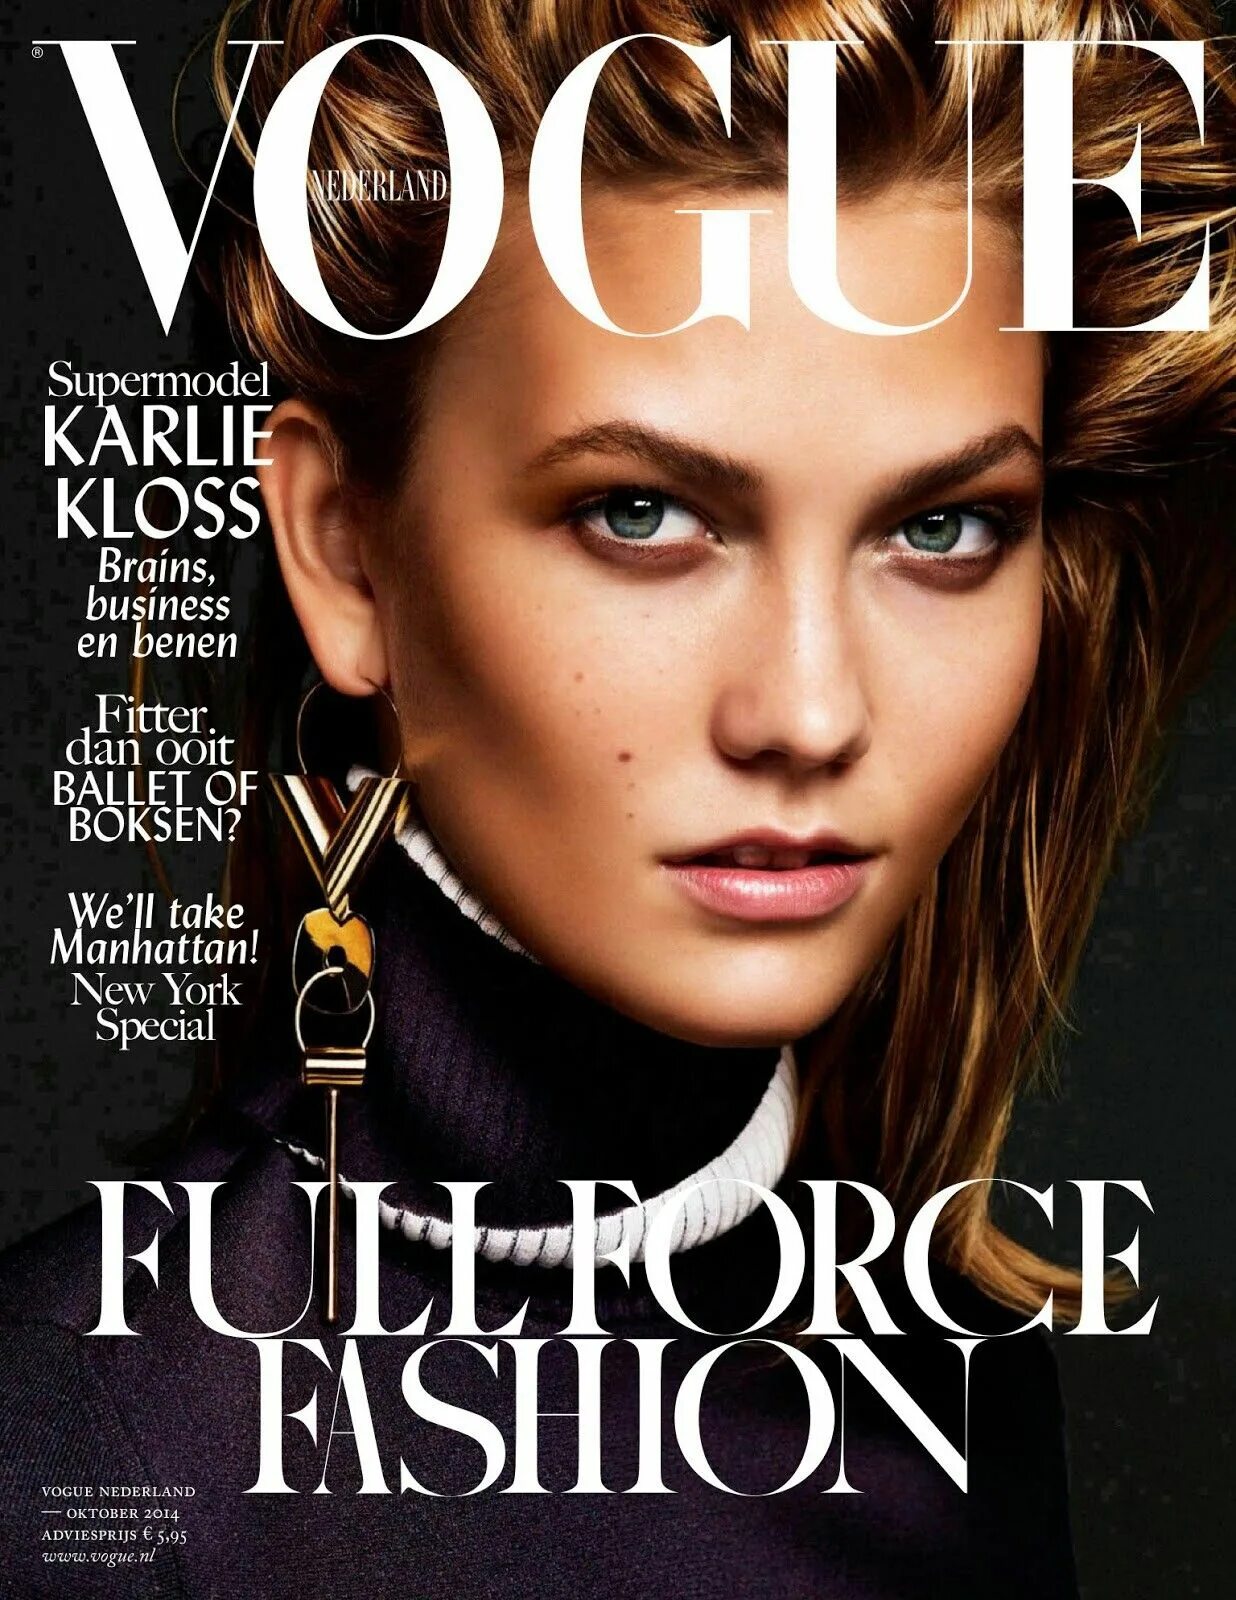 Обложки журналов моды. Karlie Kloss Vogue. Карли Клосс обложка Вог. Карли Клосс на обложке Vogue. Карли Клосс обложки журнала.